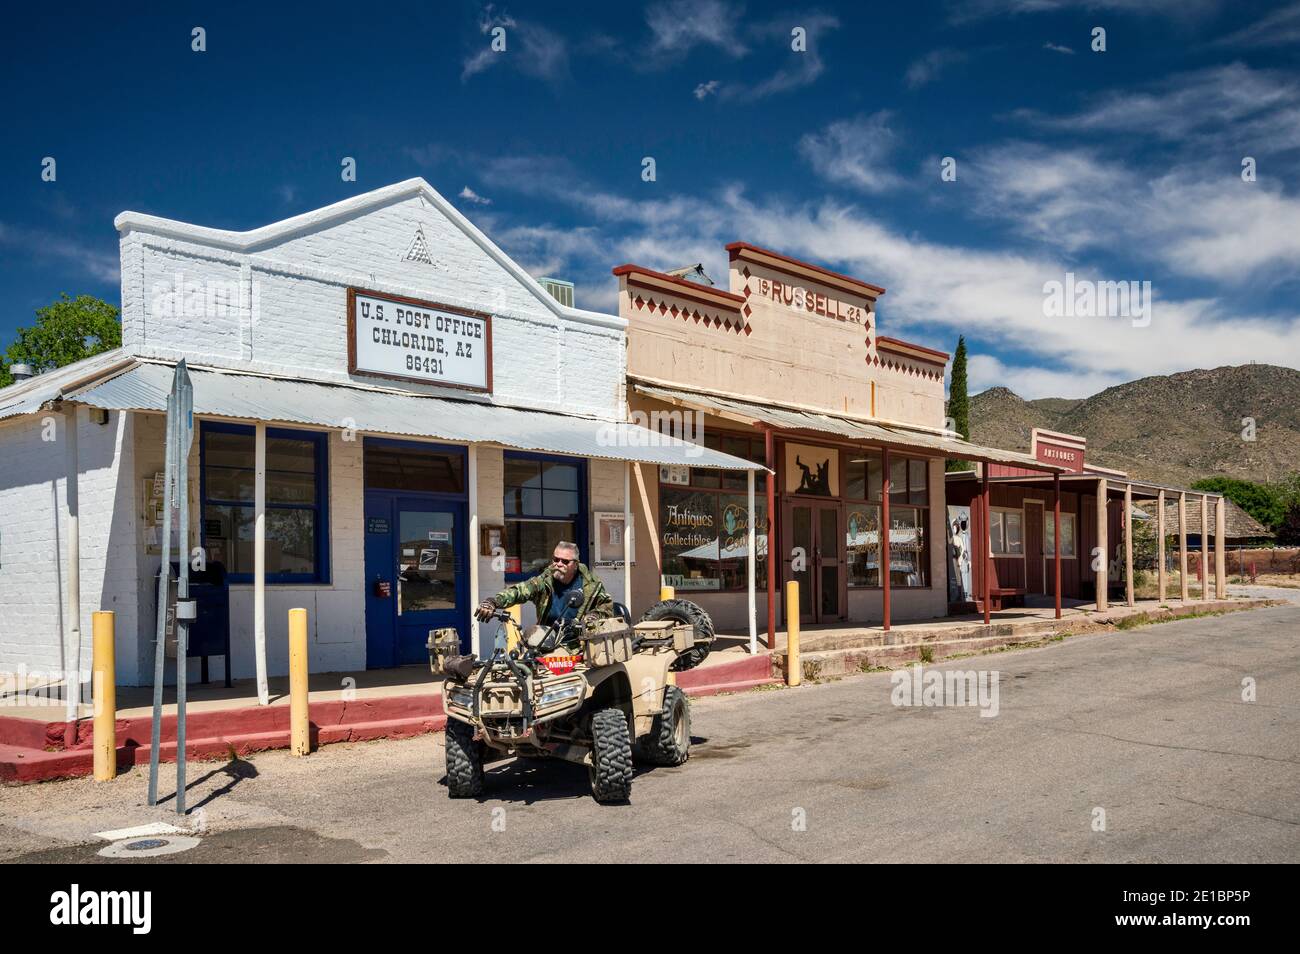 Ältere Erwachsene Reiten atv, Ladenfronten in halb-Geist Stadt Chloride, Arizona, USA Stockfoto